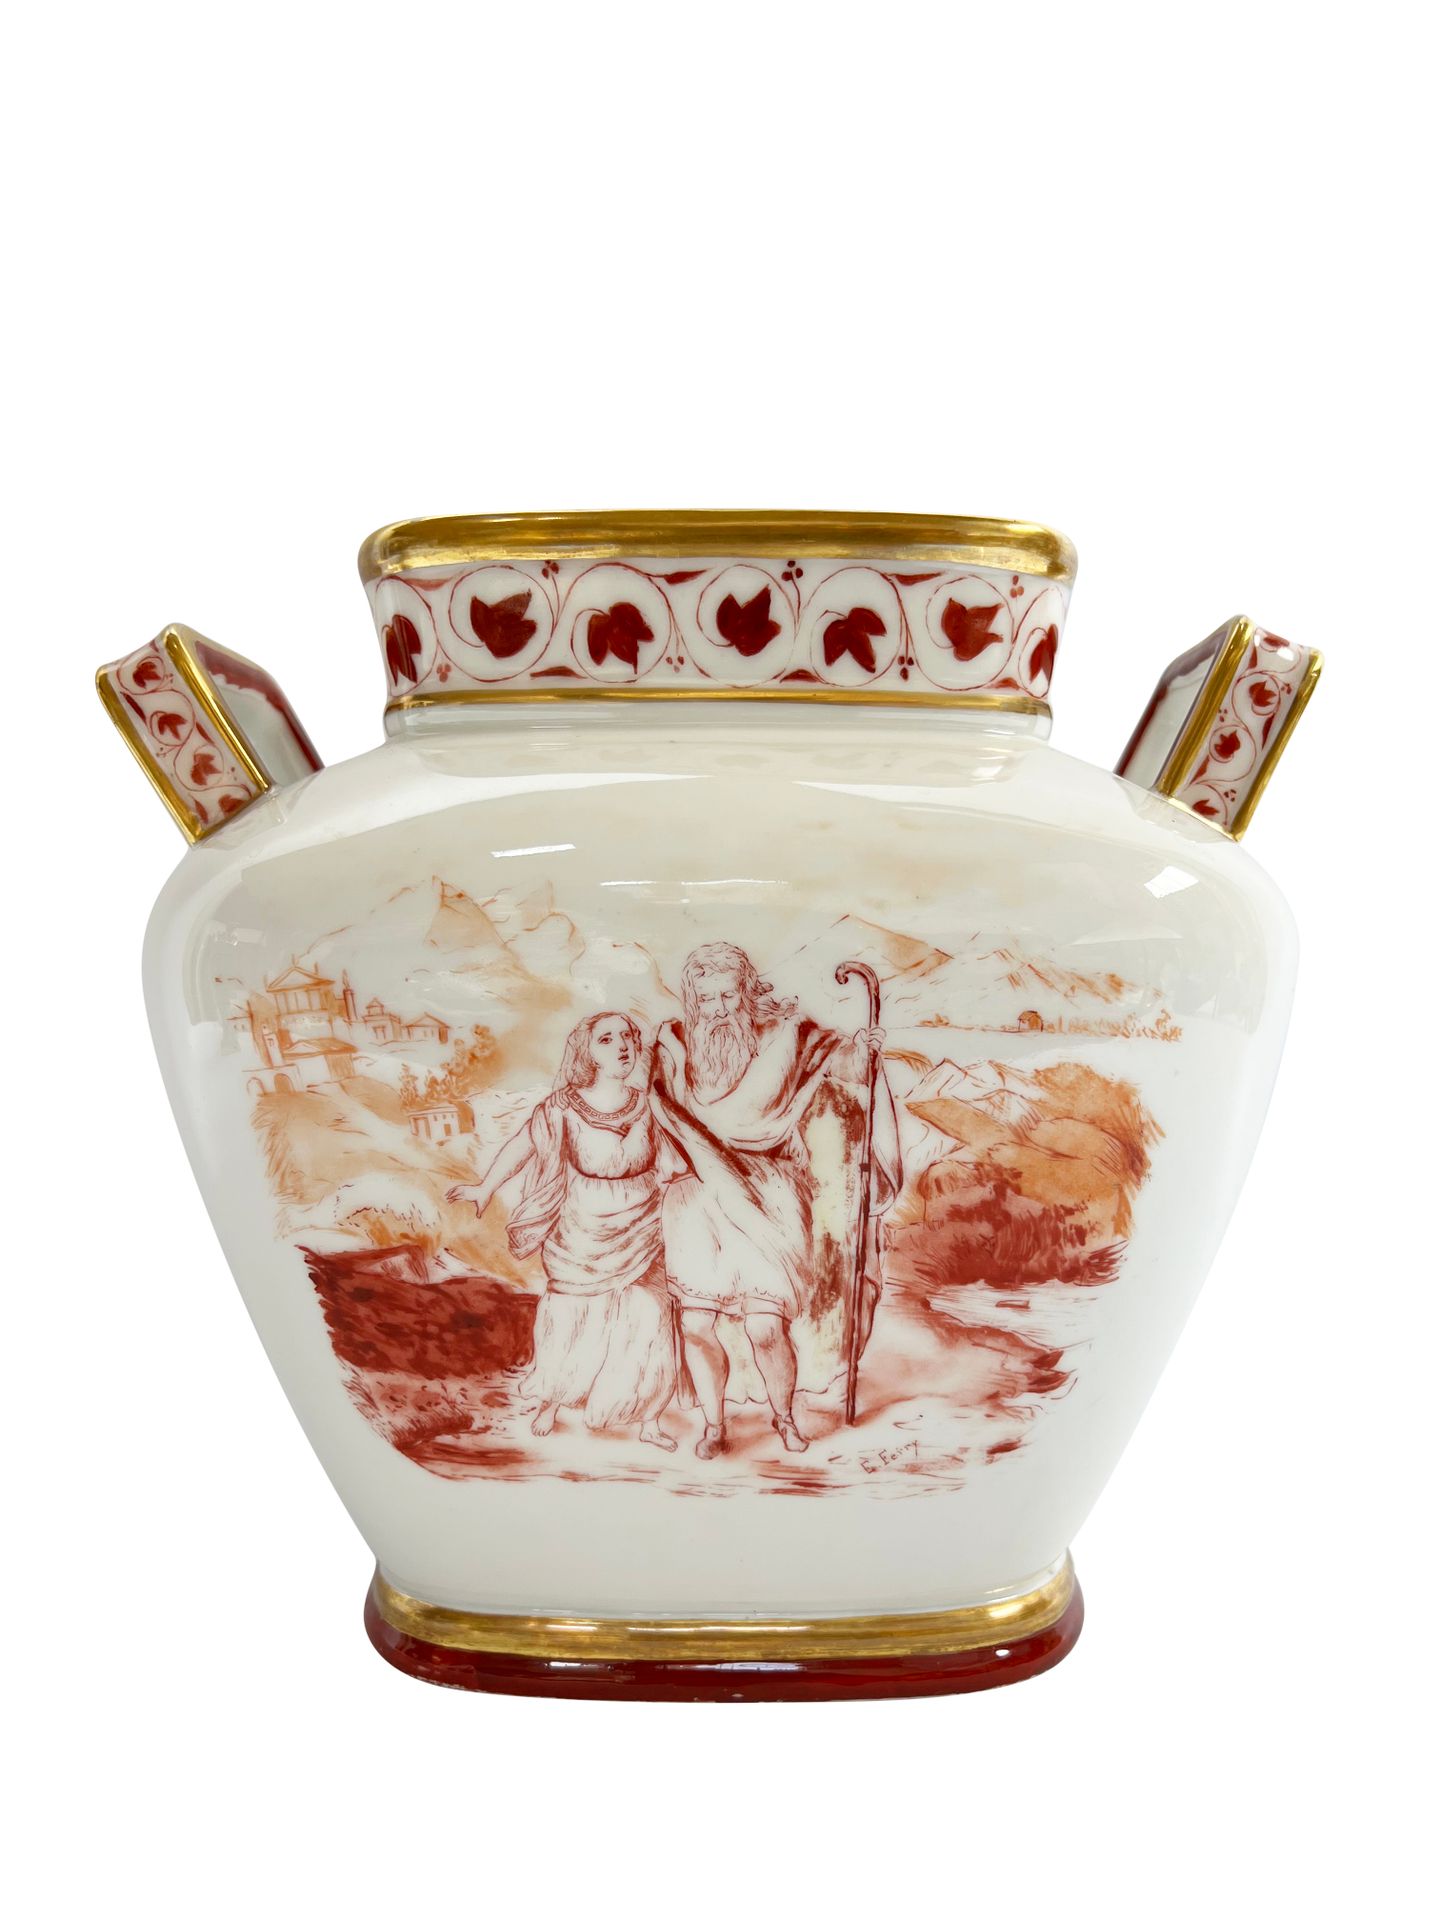 Null PARIS (?) , XIXth century
Porcelain vase with two handles on a heel decorat&hellip;